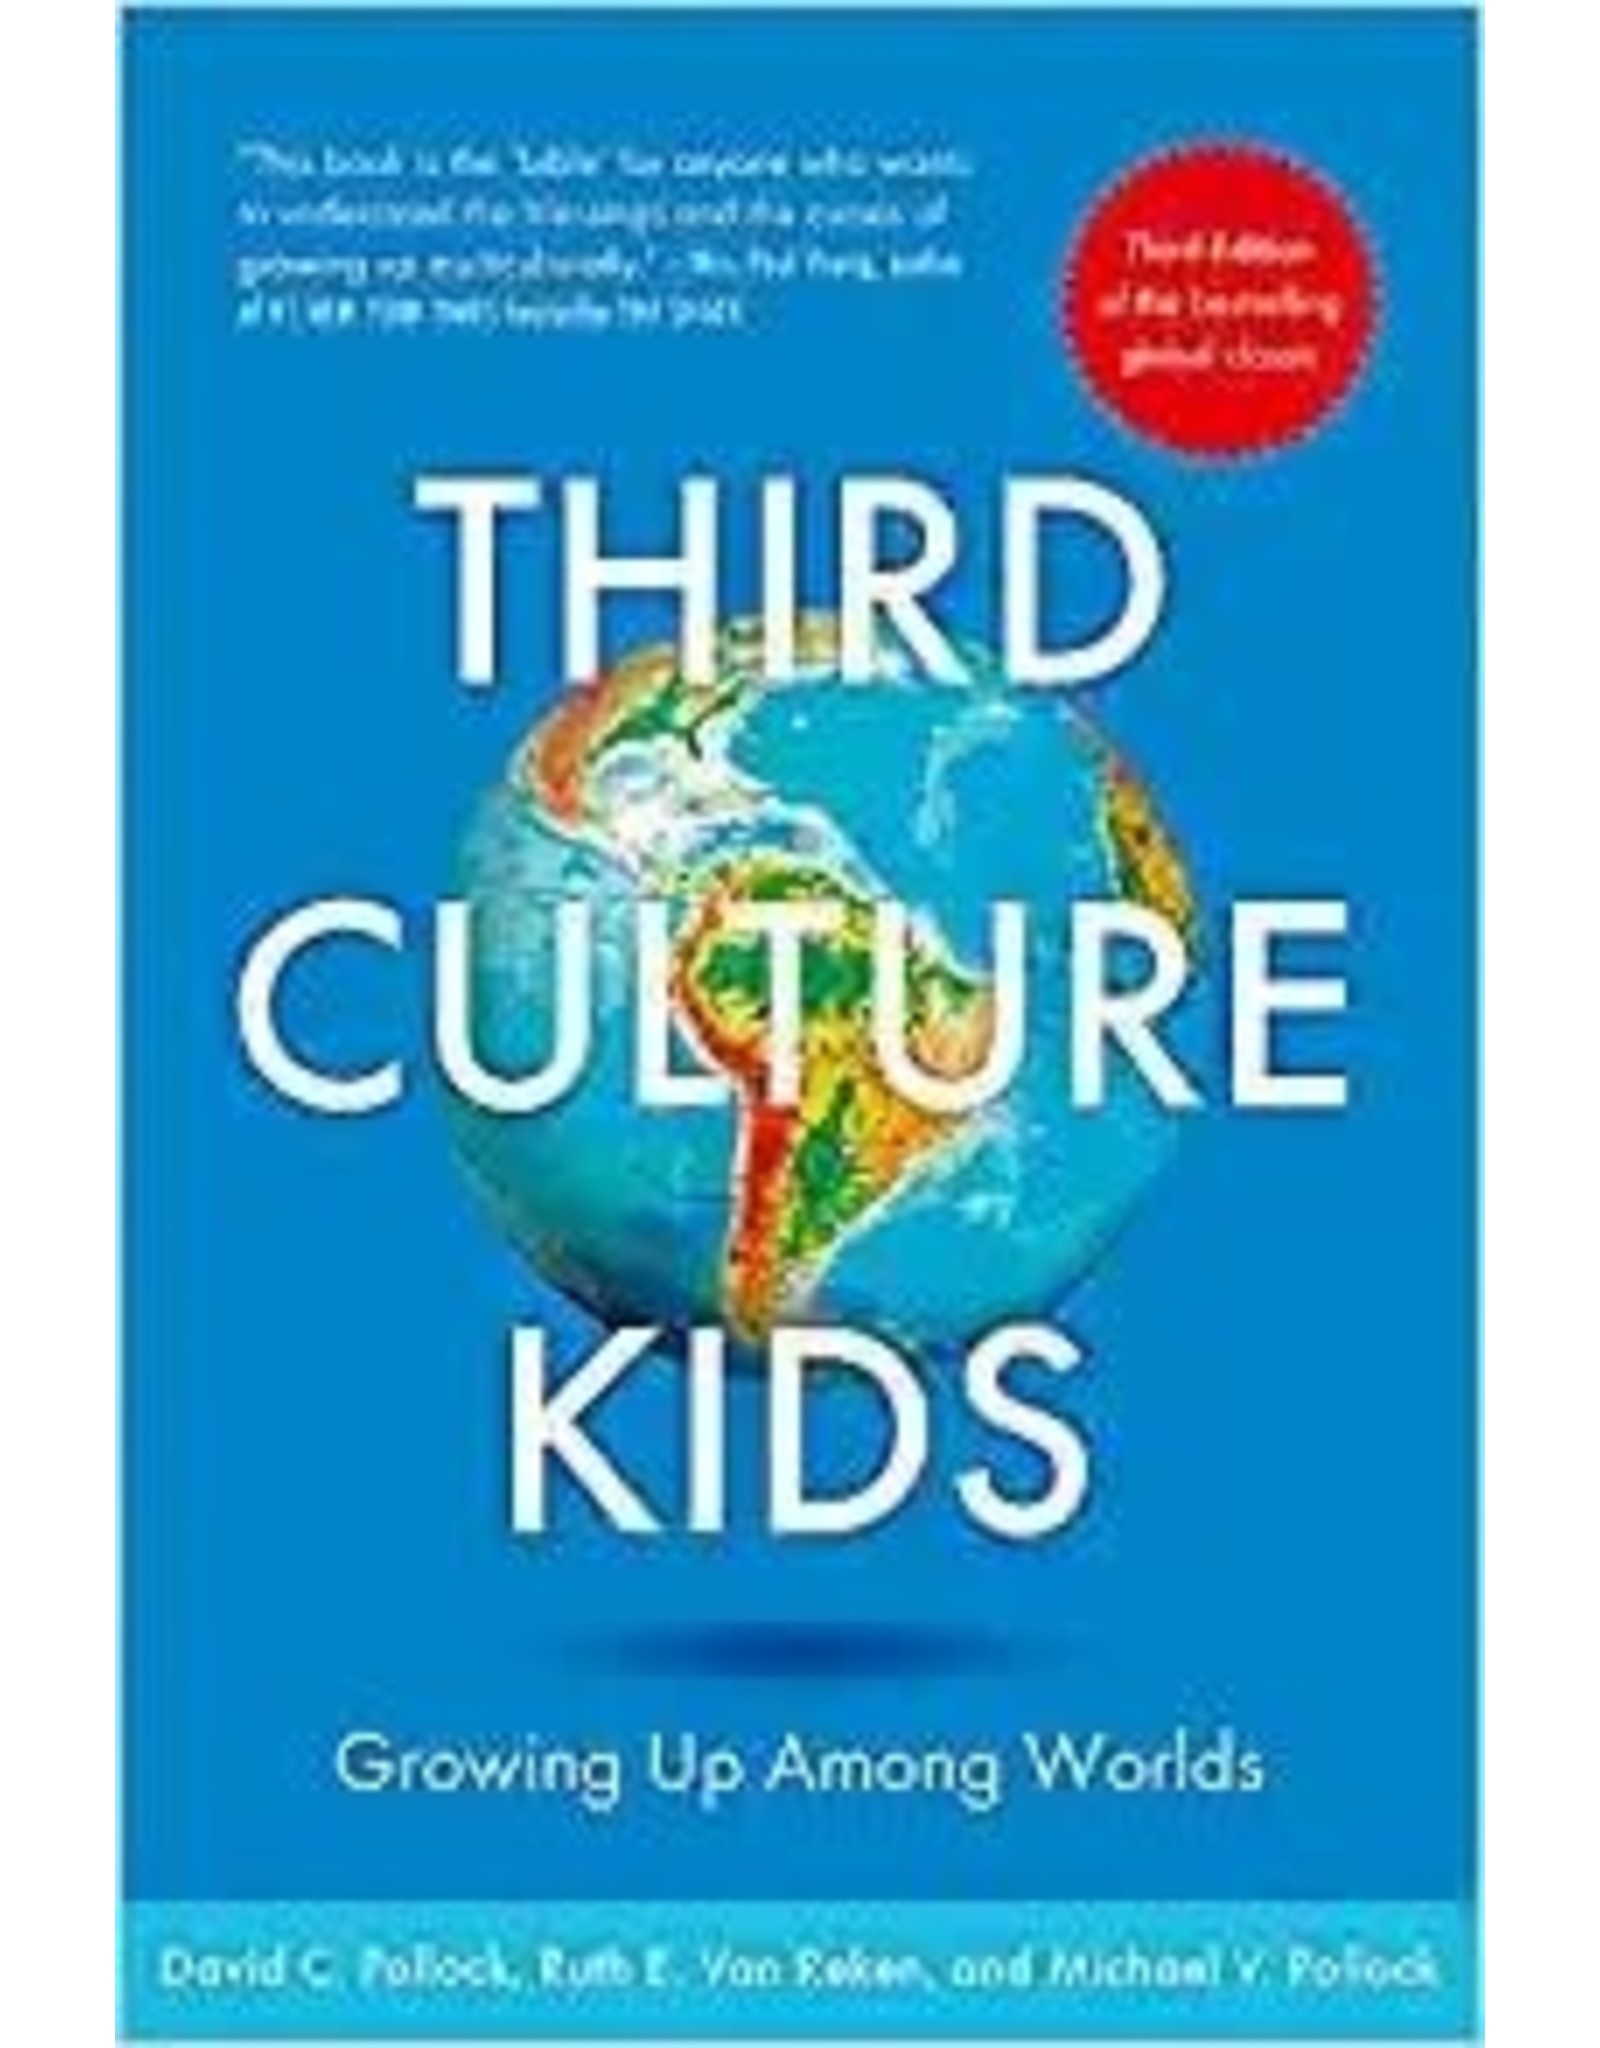 Third Culture Kids Book